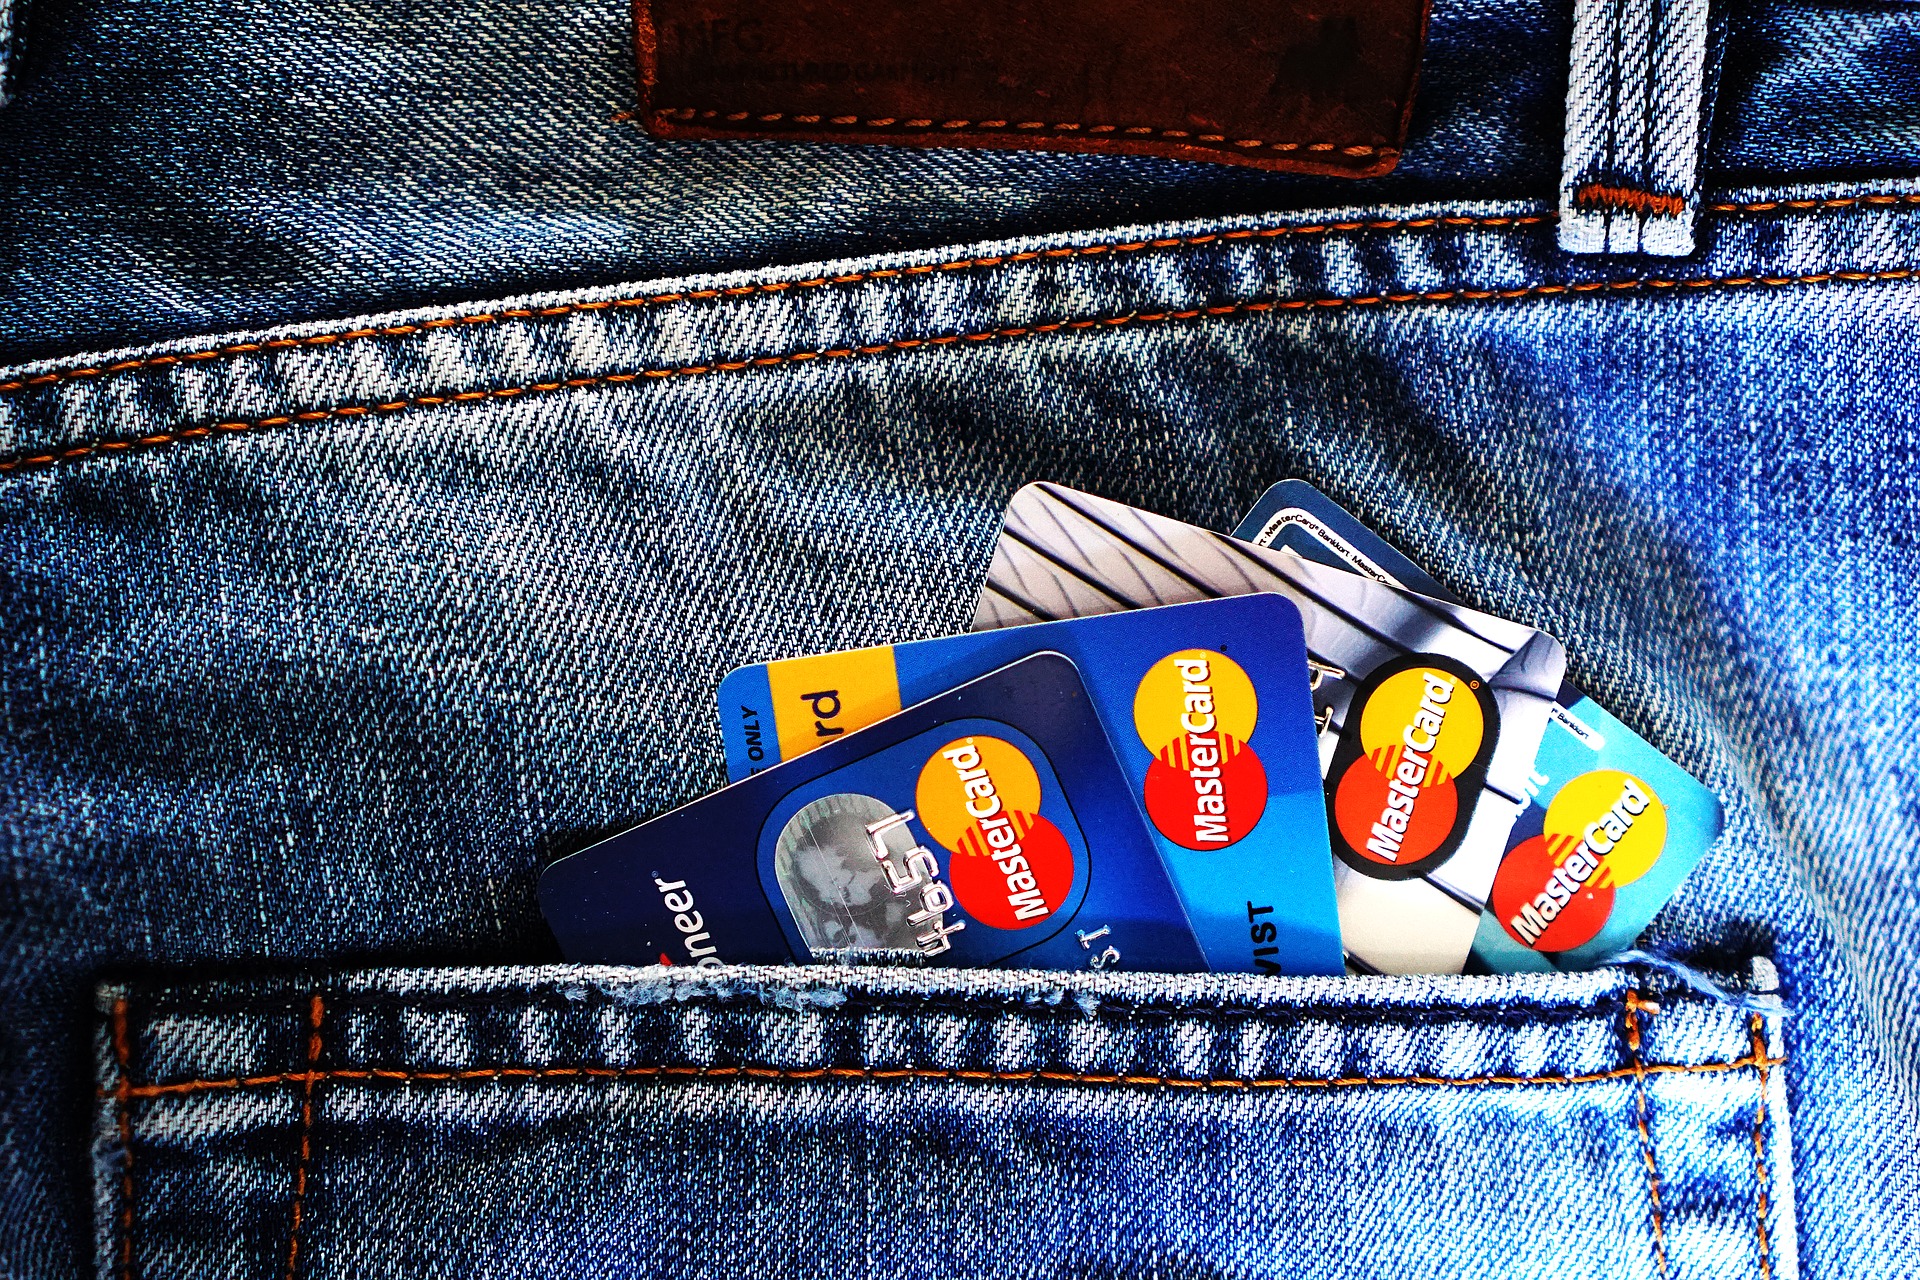 Credit and debit cards make people better spenders versus savers